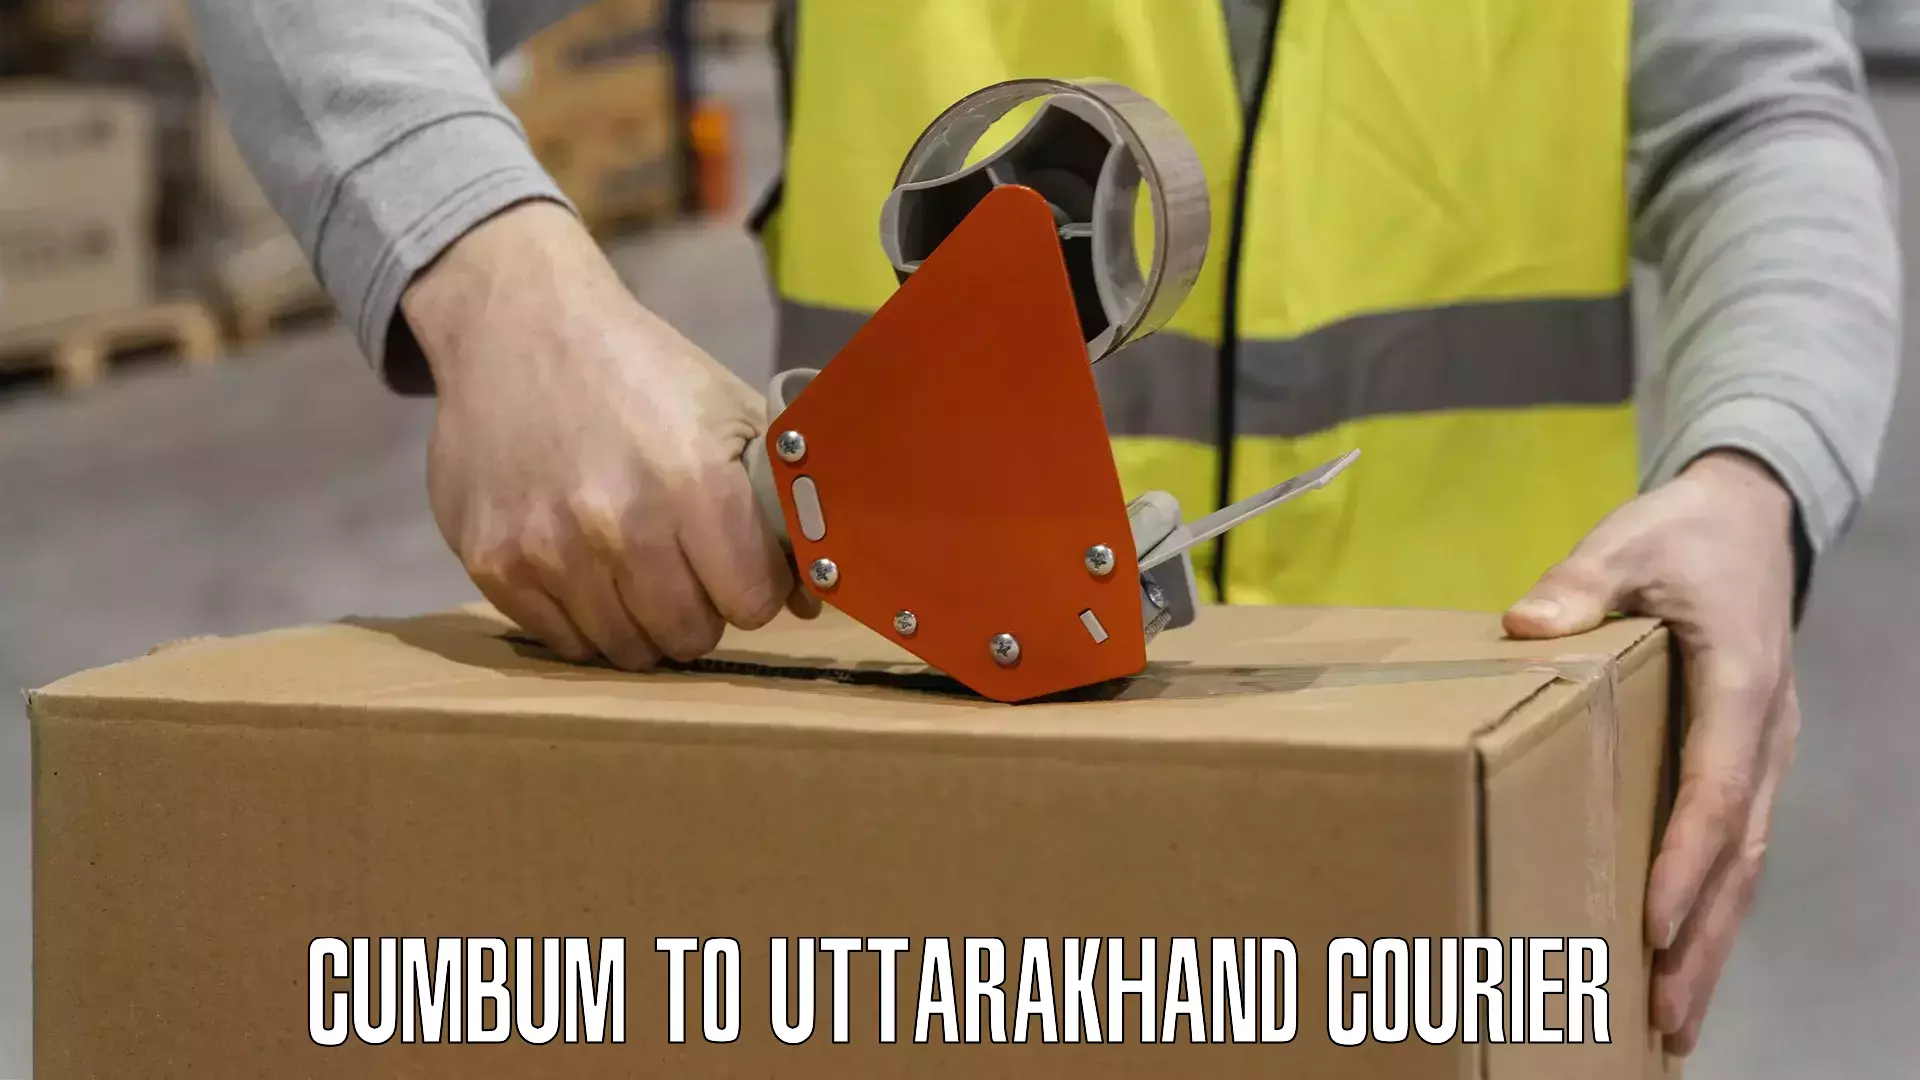 Custom courier packaging Cumbum to Uttarakhand